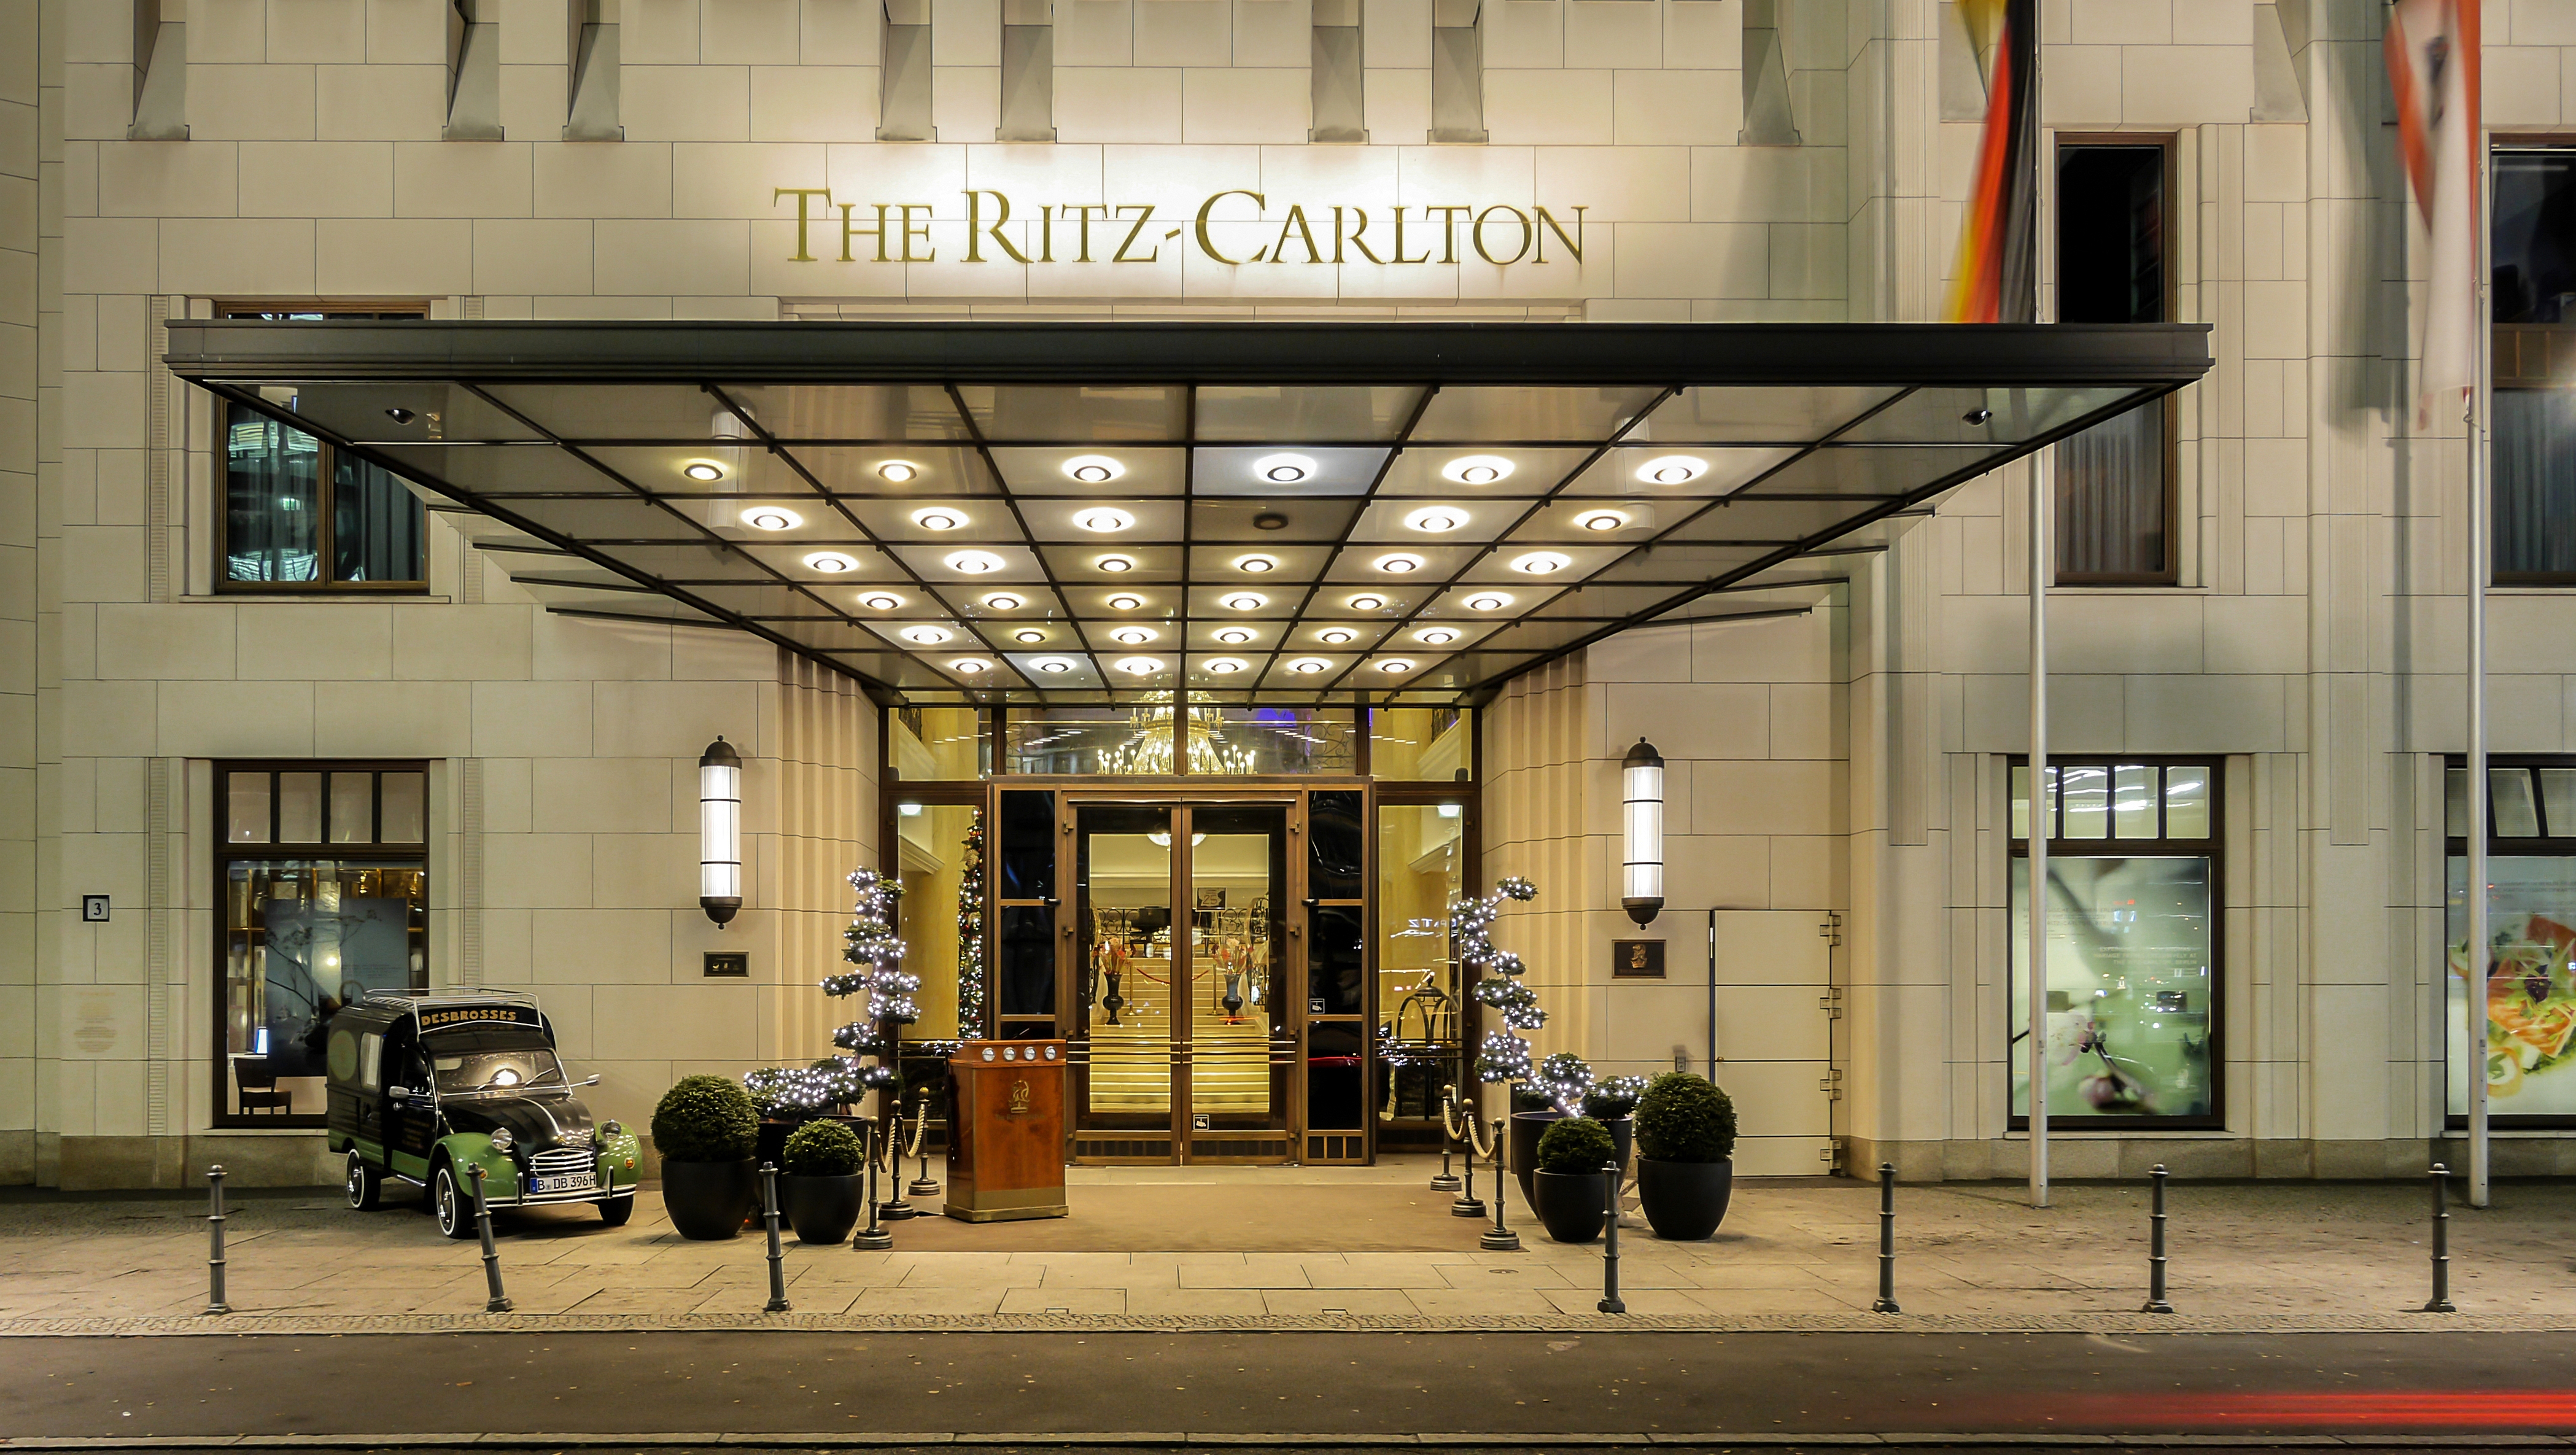 Amazing Ritz-Carlton, Berlin Pictures & Backgrounds